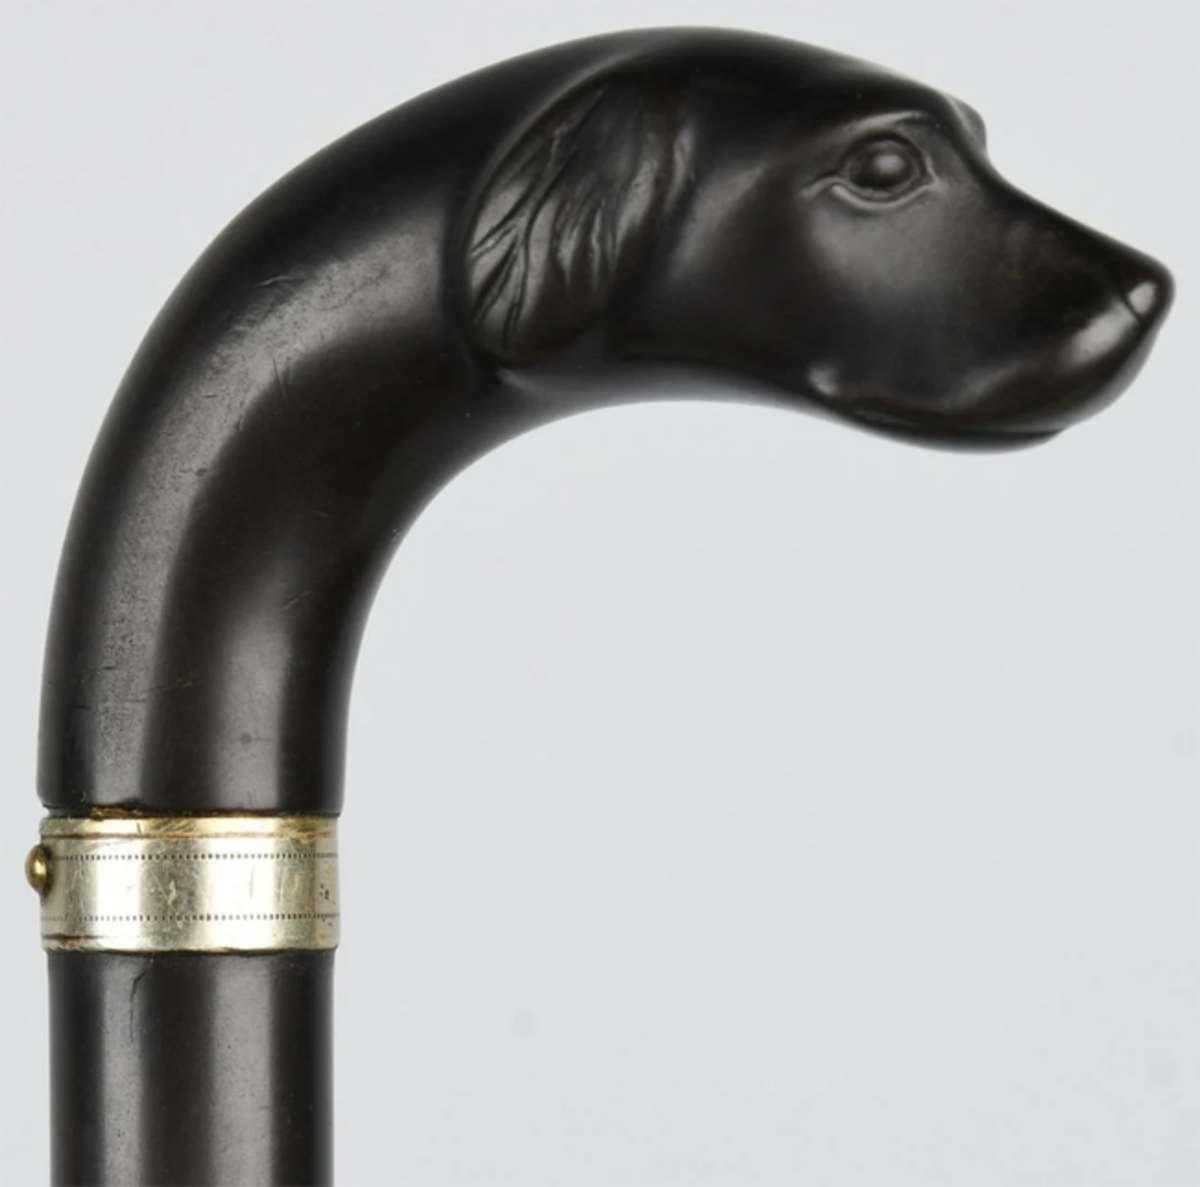  Remington .22 caliber cane gun with small dog’s head handle, 1866-1888, gutta percha veneer with German silver collar.